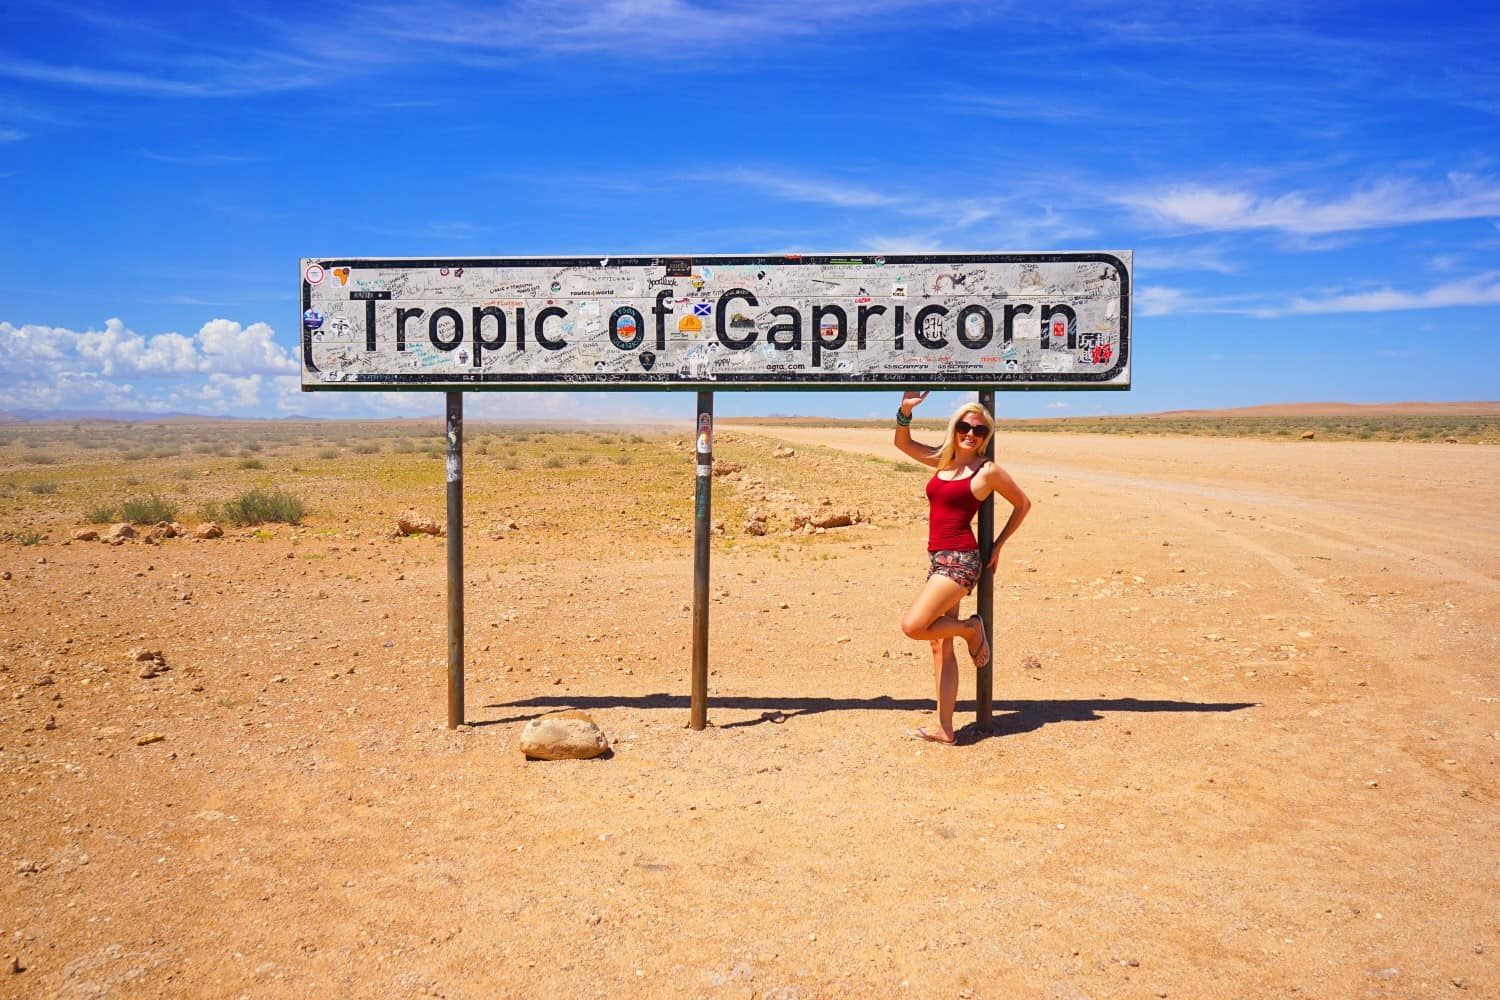 Lauren at the Tropic of Capricorn